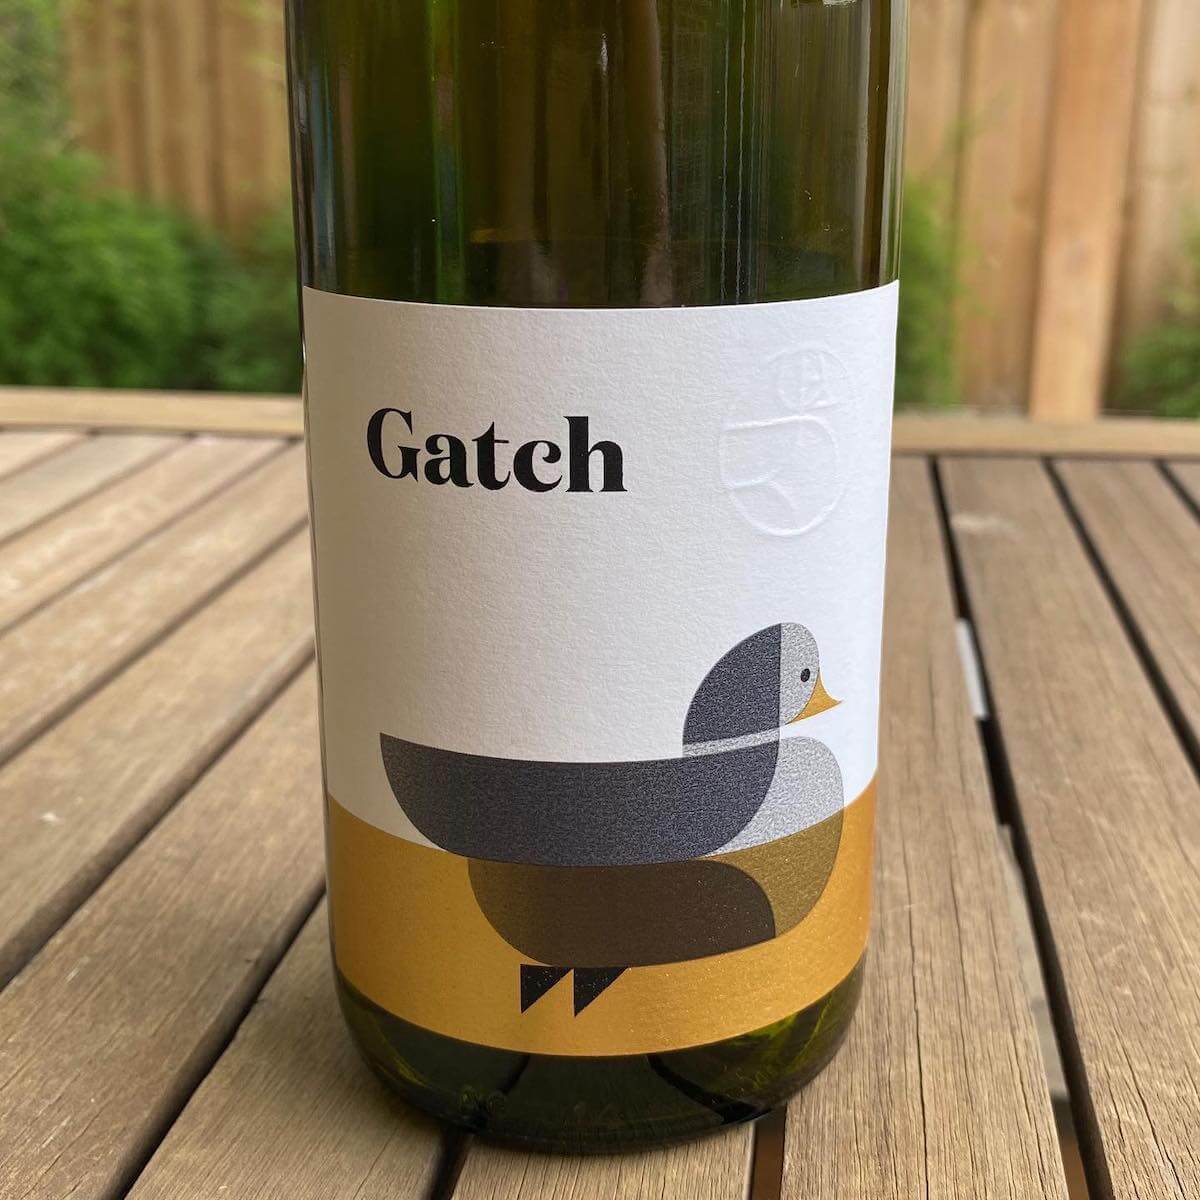 Gatch Wine 2018 White Blend - South Australia